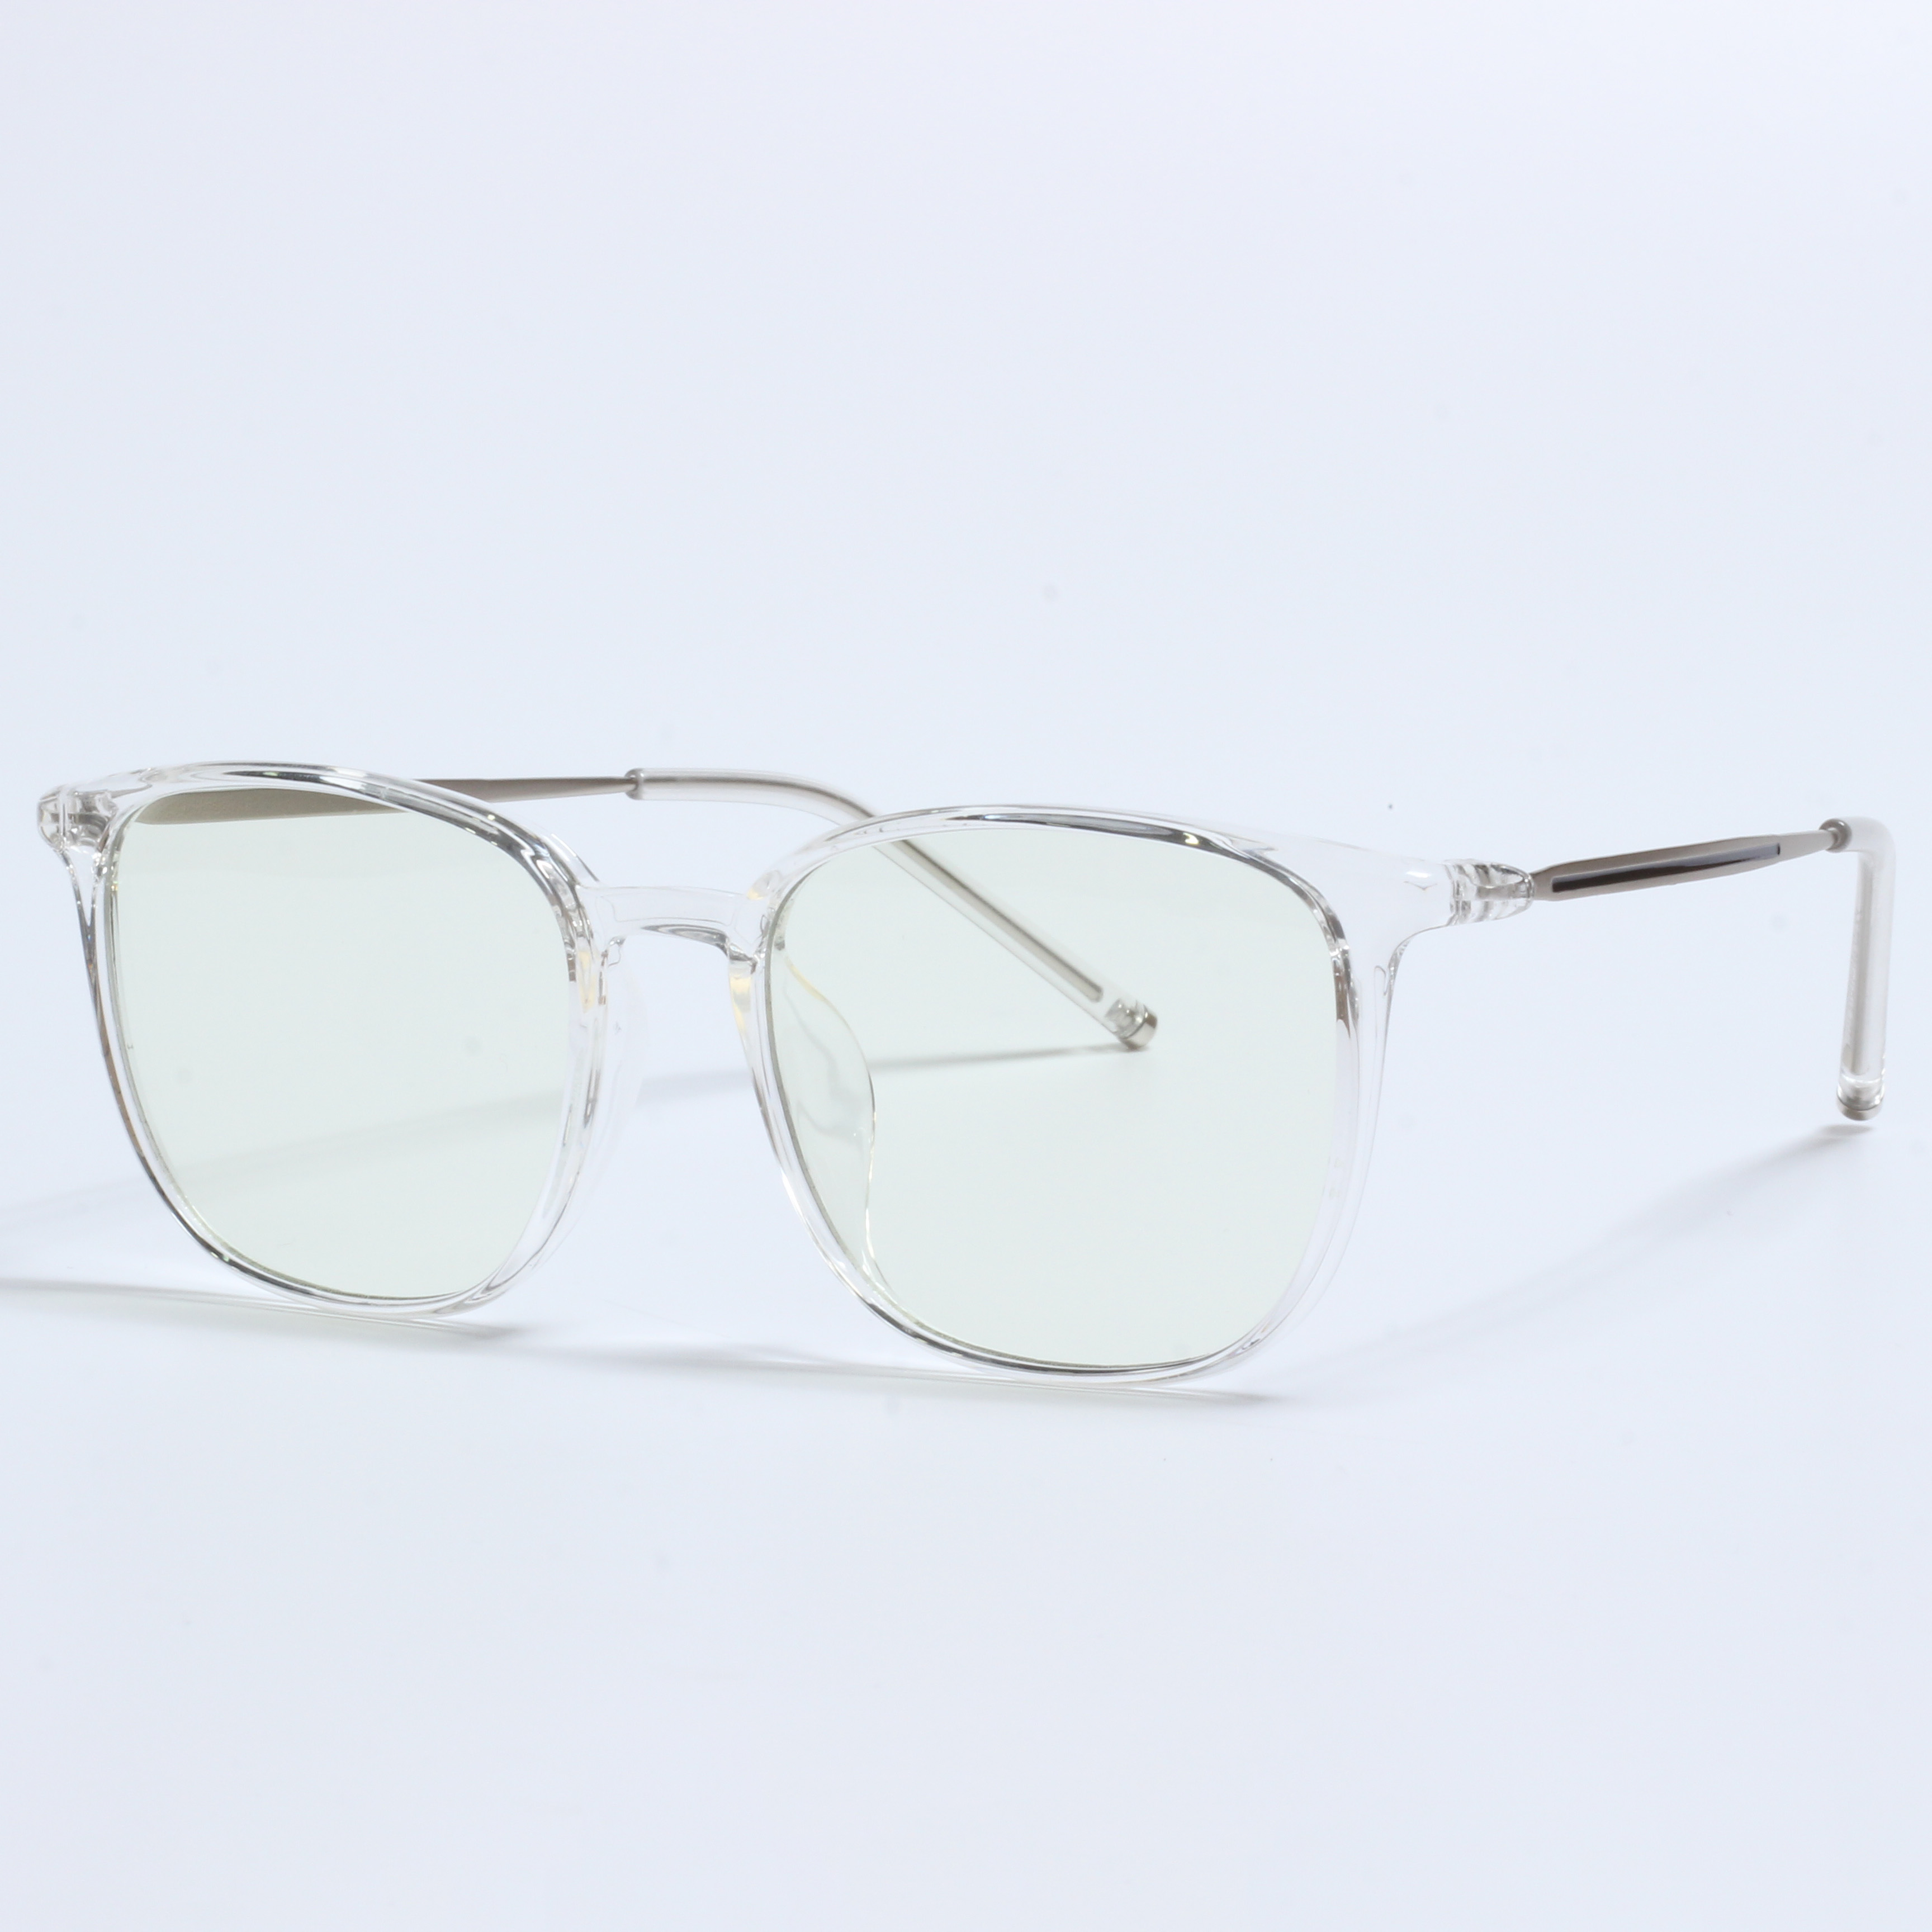 Muraayadaha daawada retro lunette anti lumiere cusub (3)